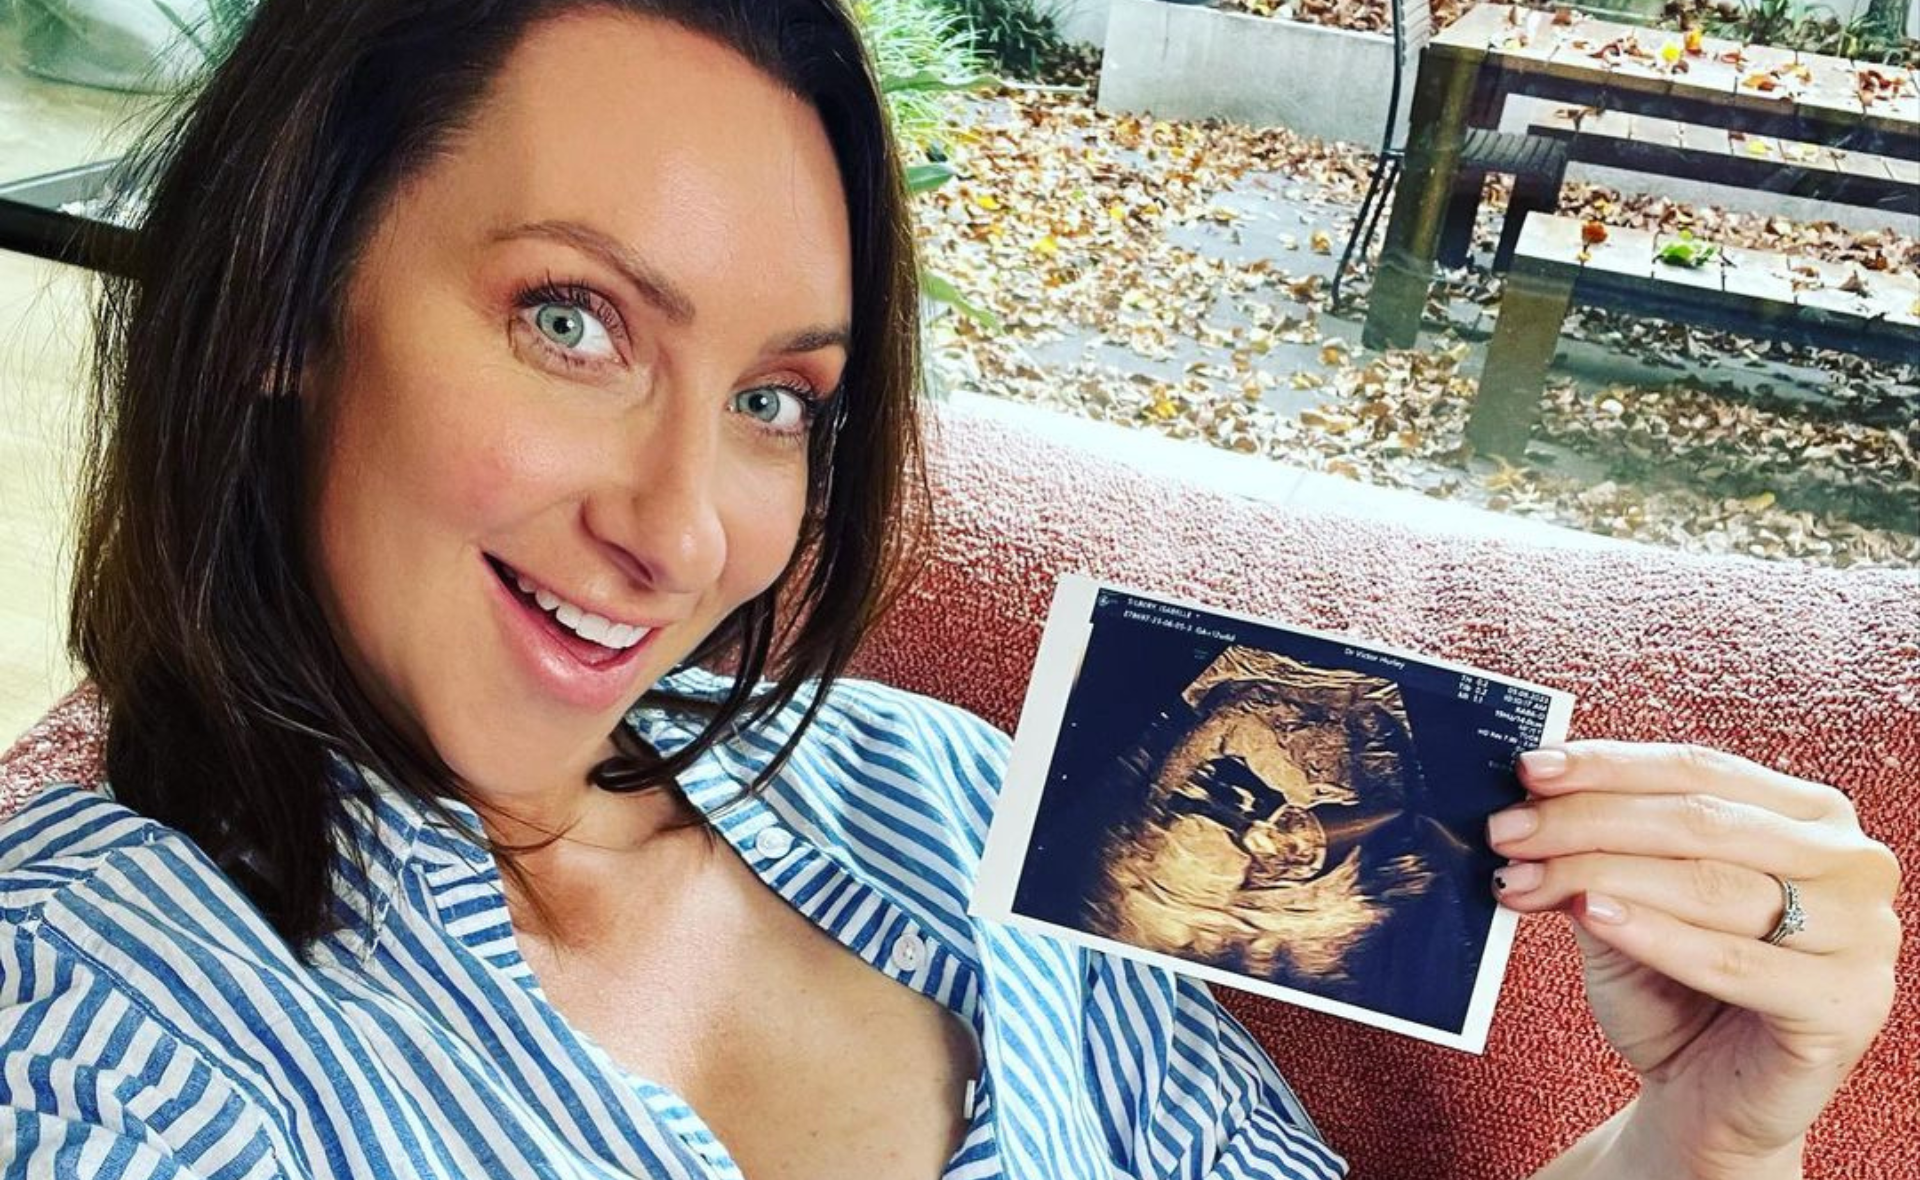 Gogglebox Australia’s Isabelle Silbury has welcomed her baby girl